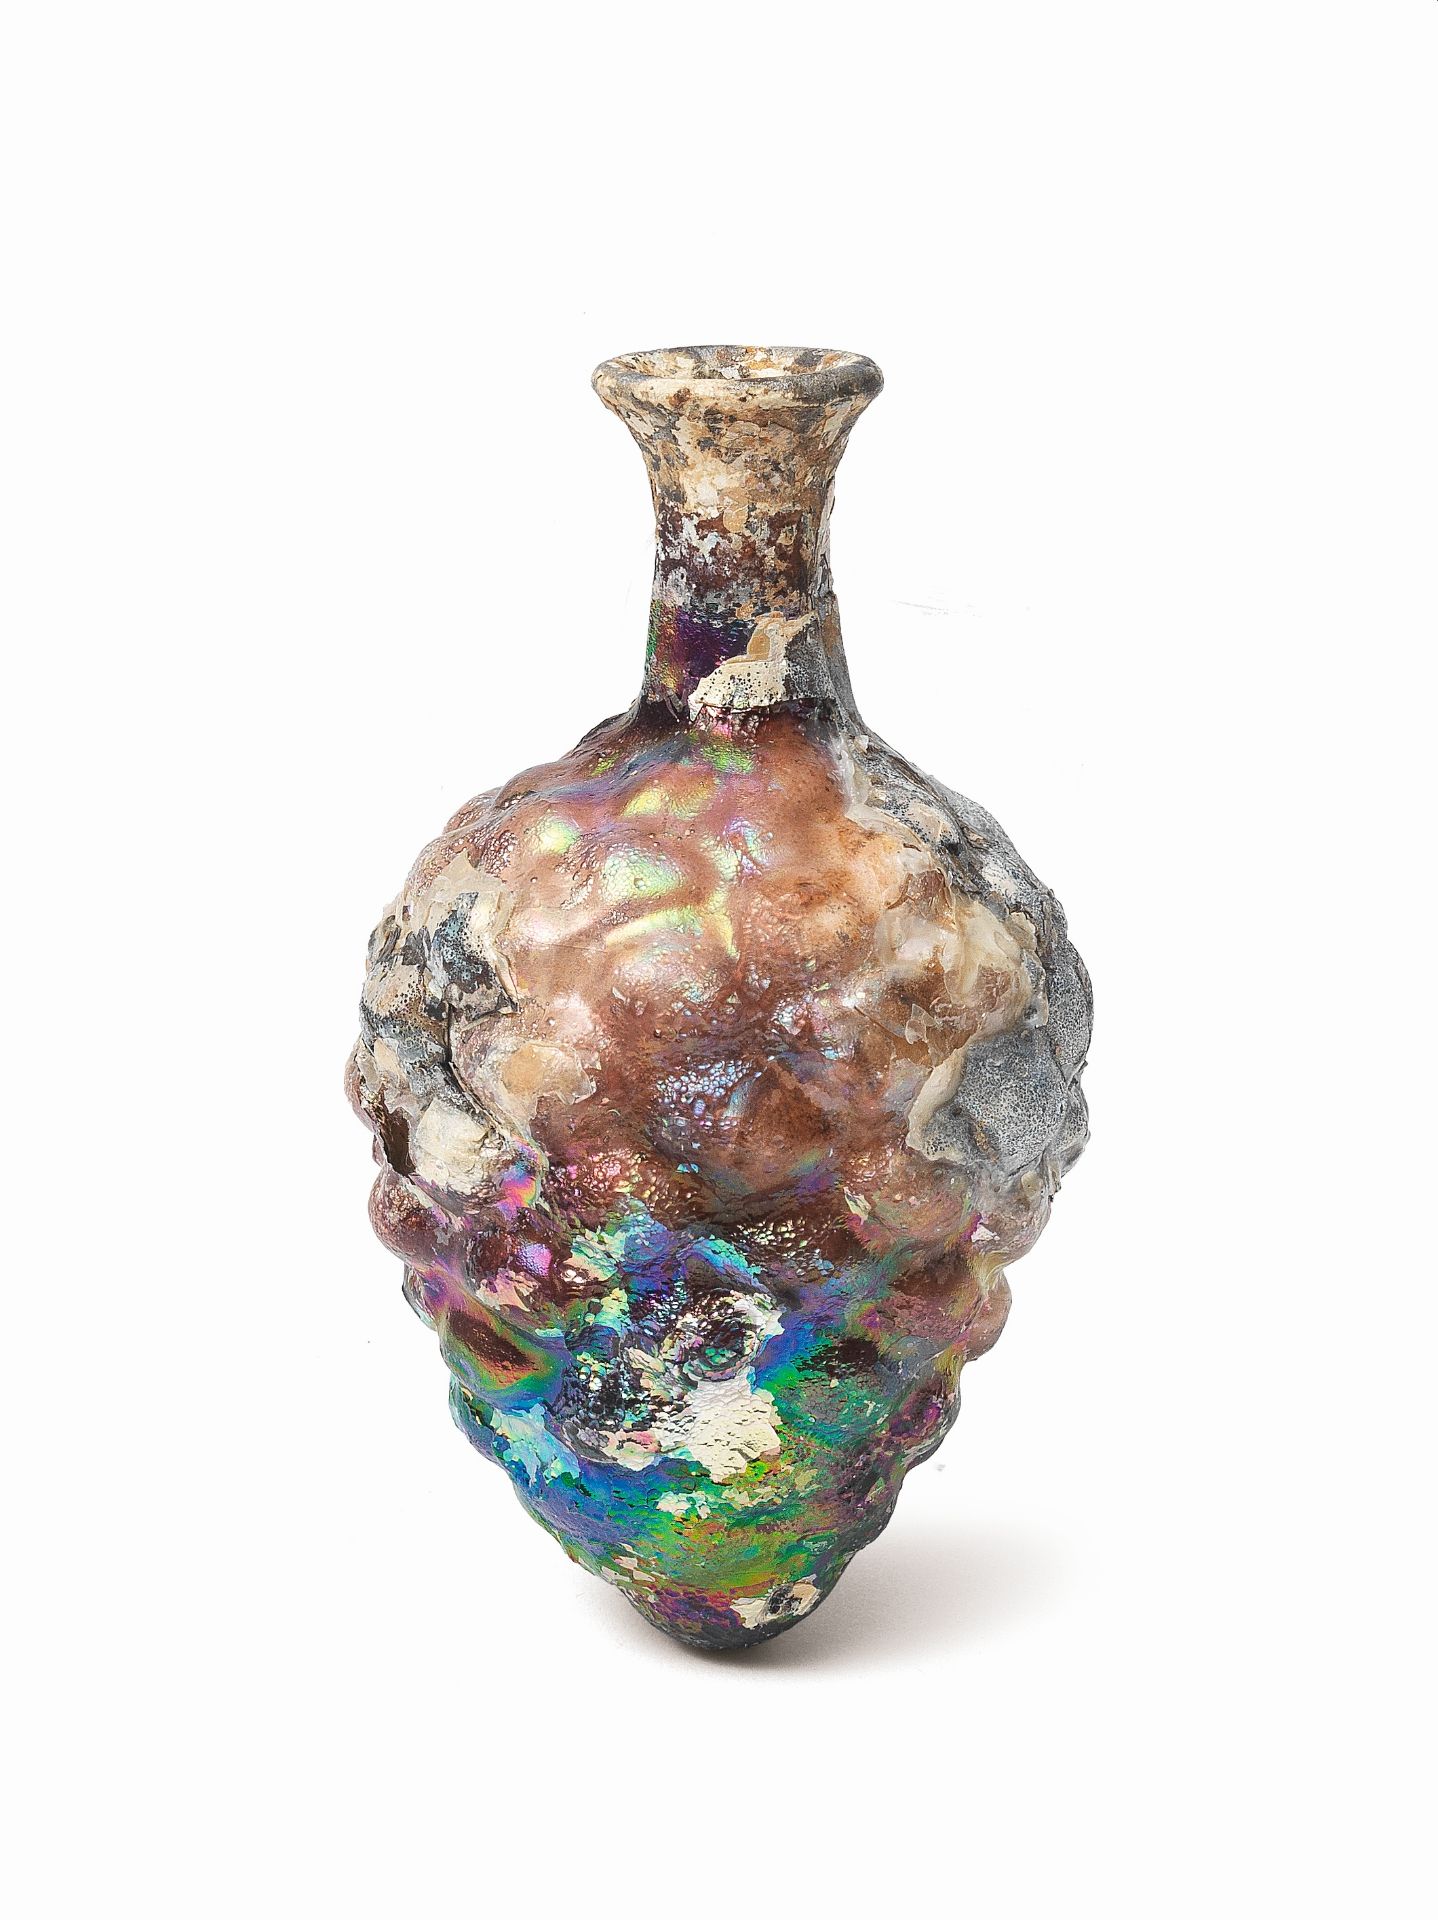 A Roman purple glass pine cone-shaped bottle